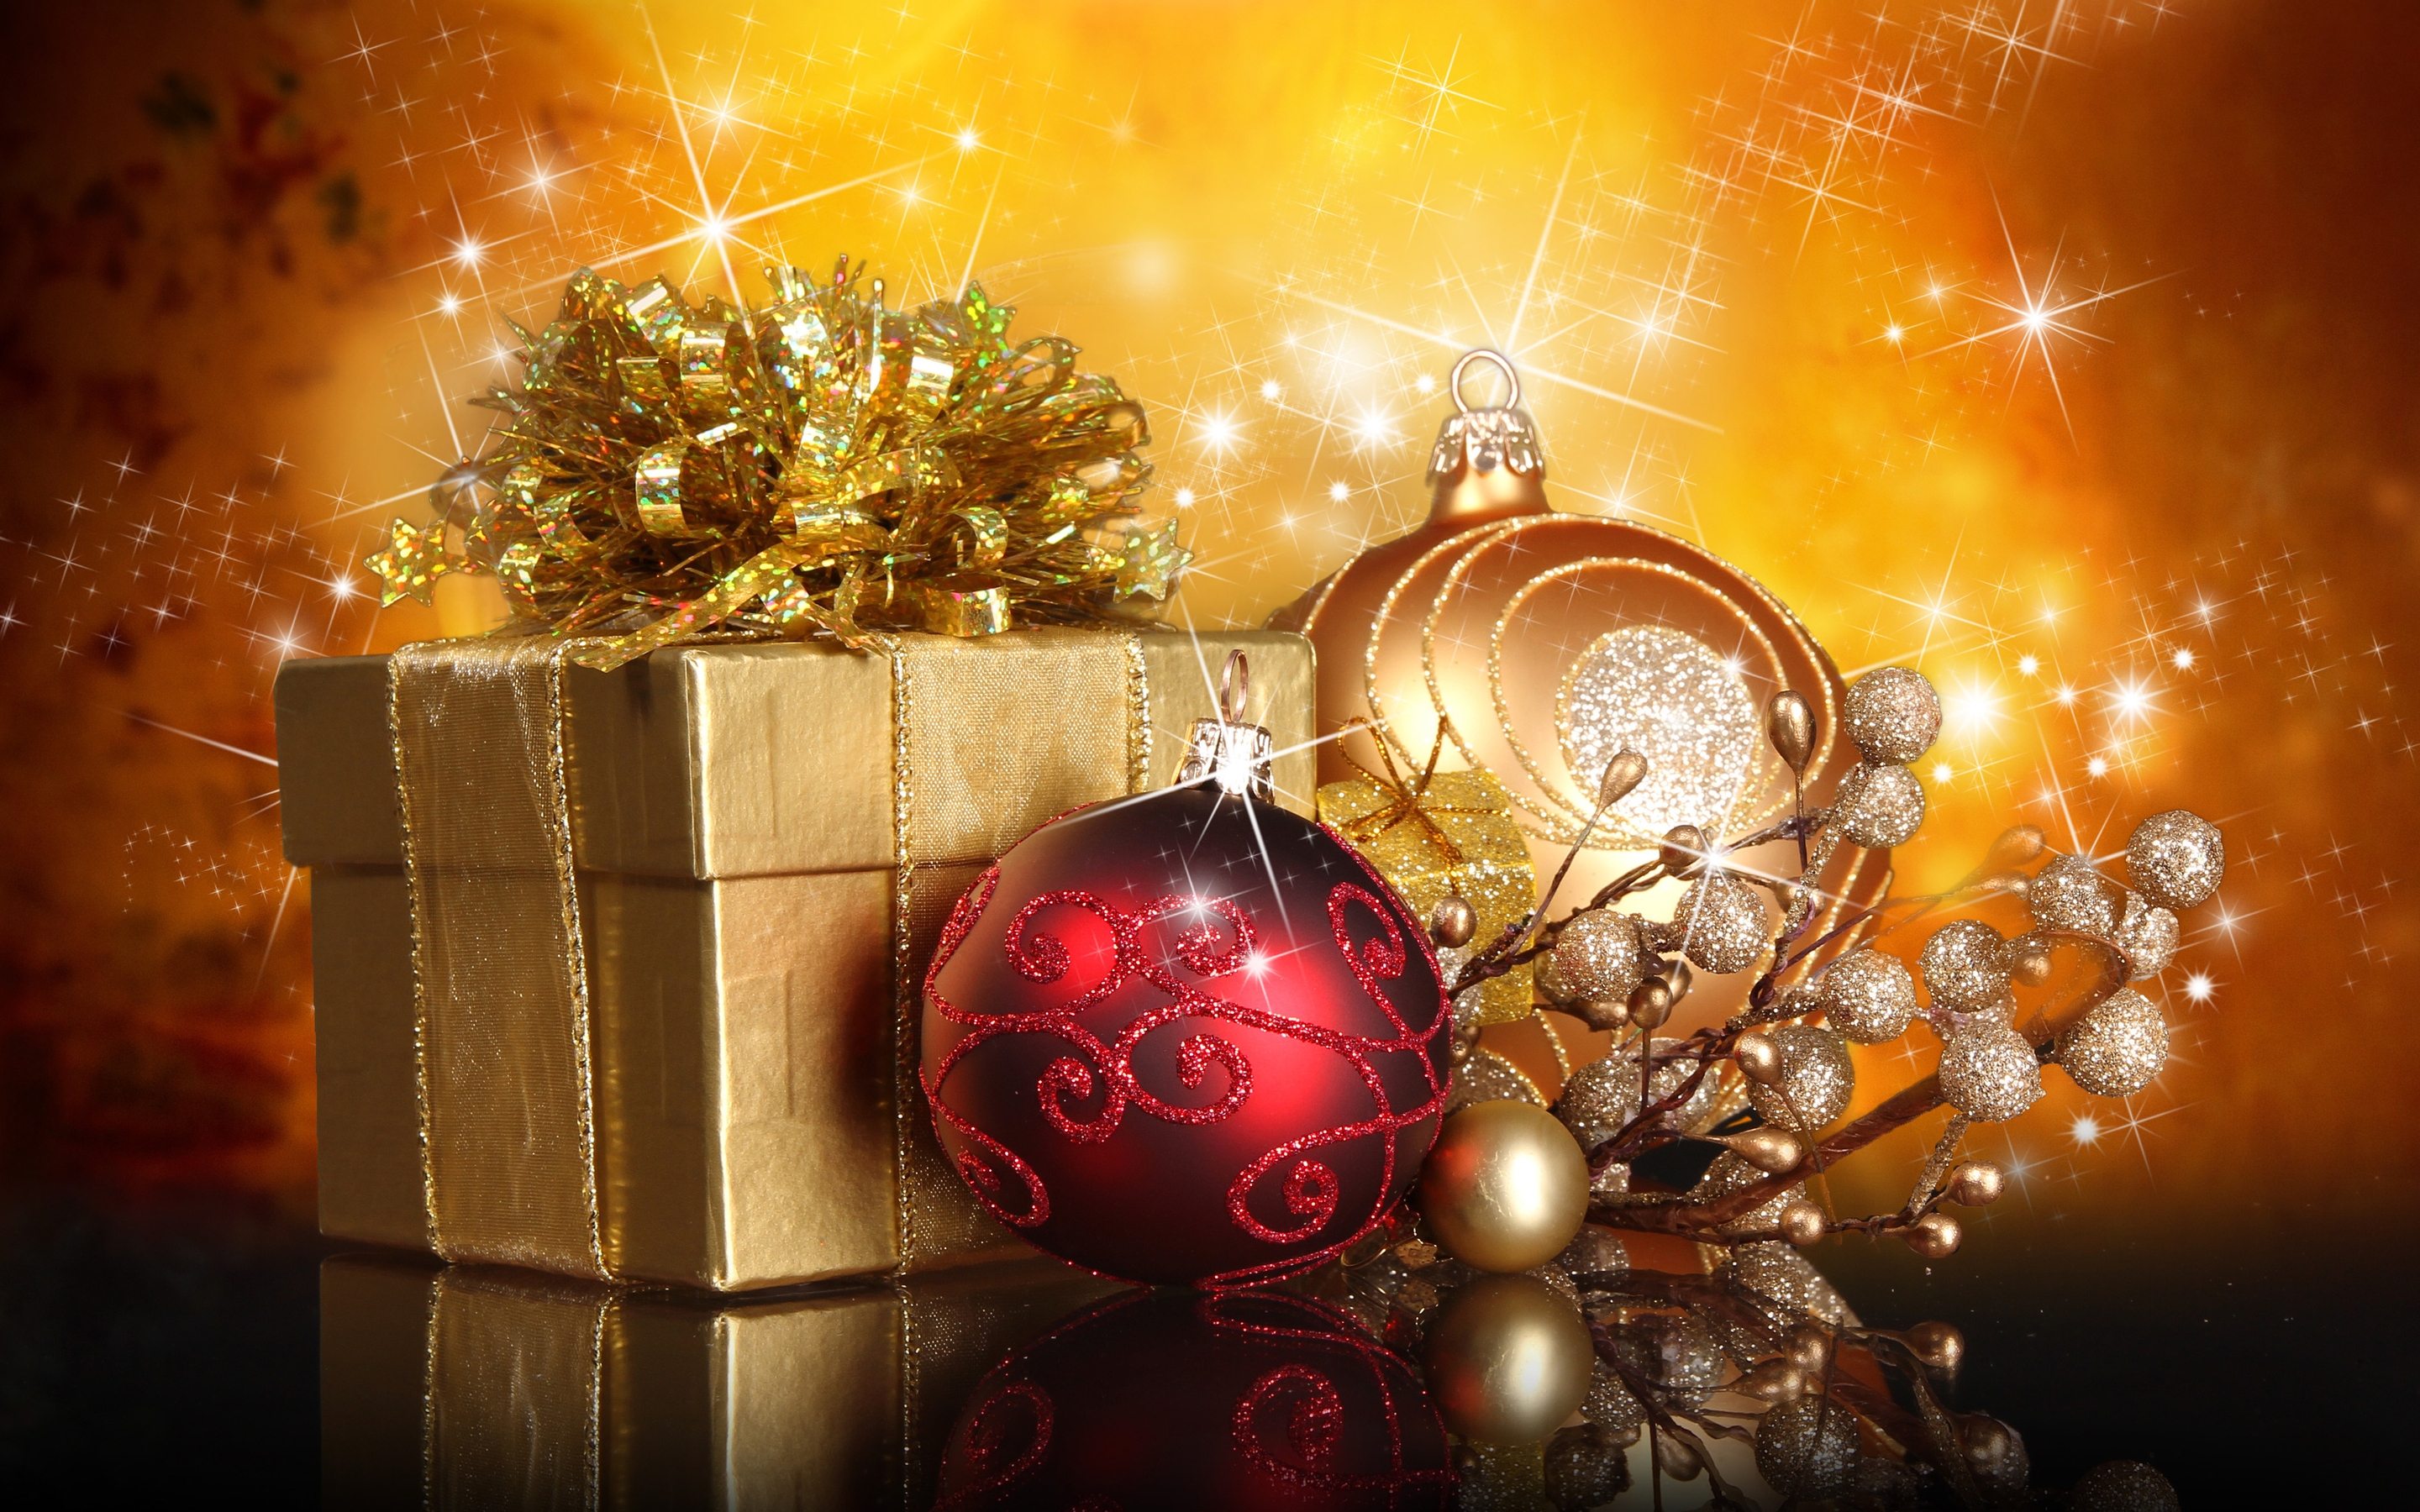 Christmas Gifts and Globes for 2880 x 1800 Retina Display resolution